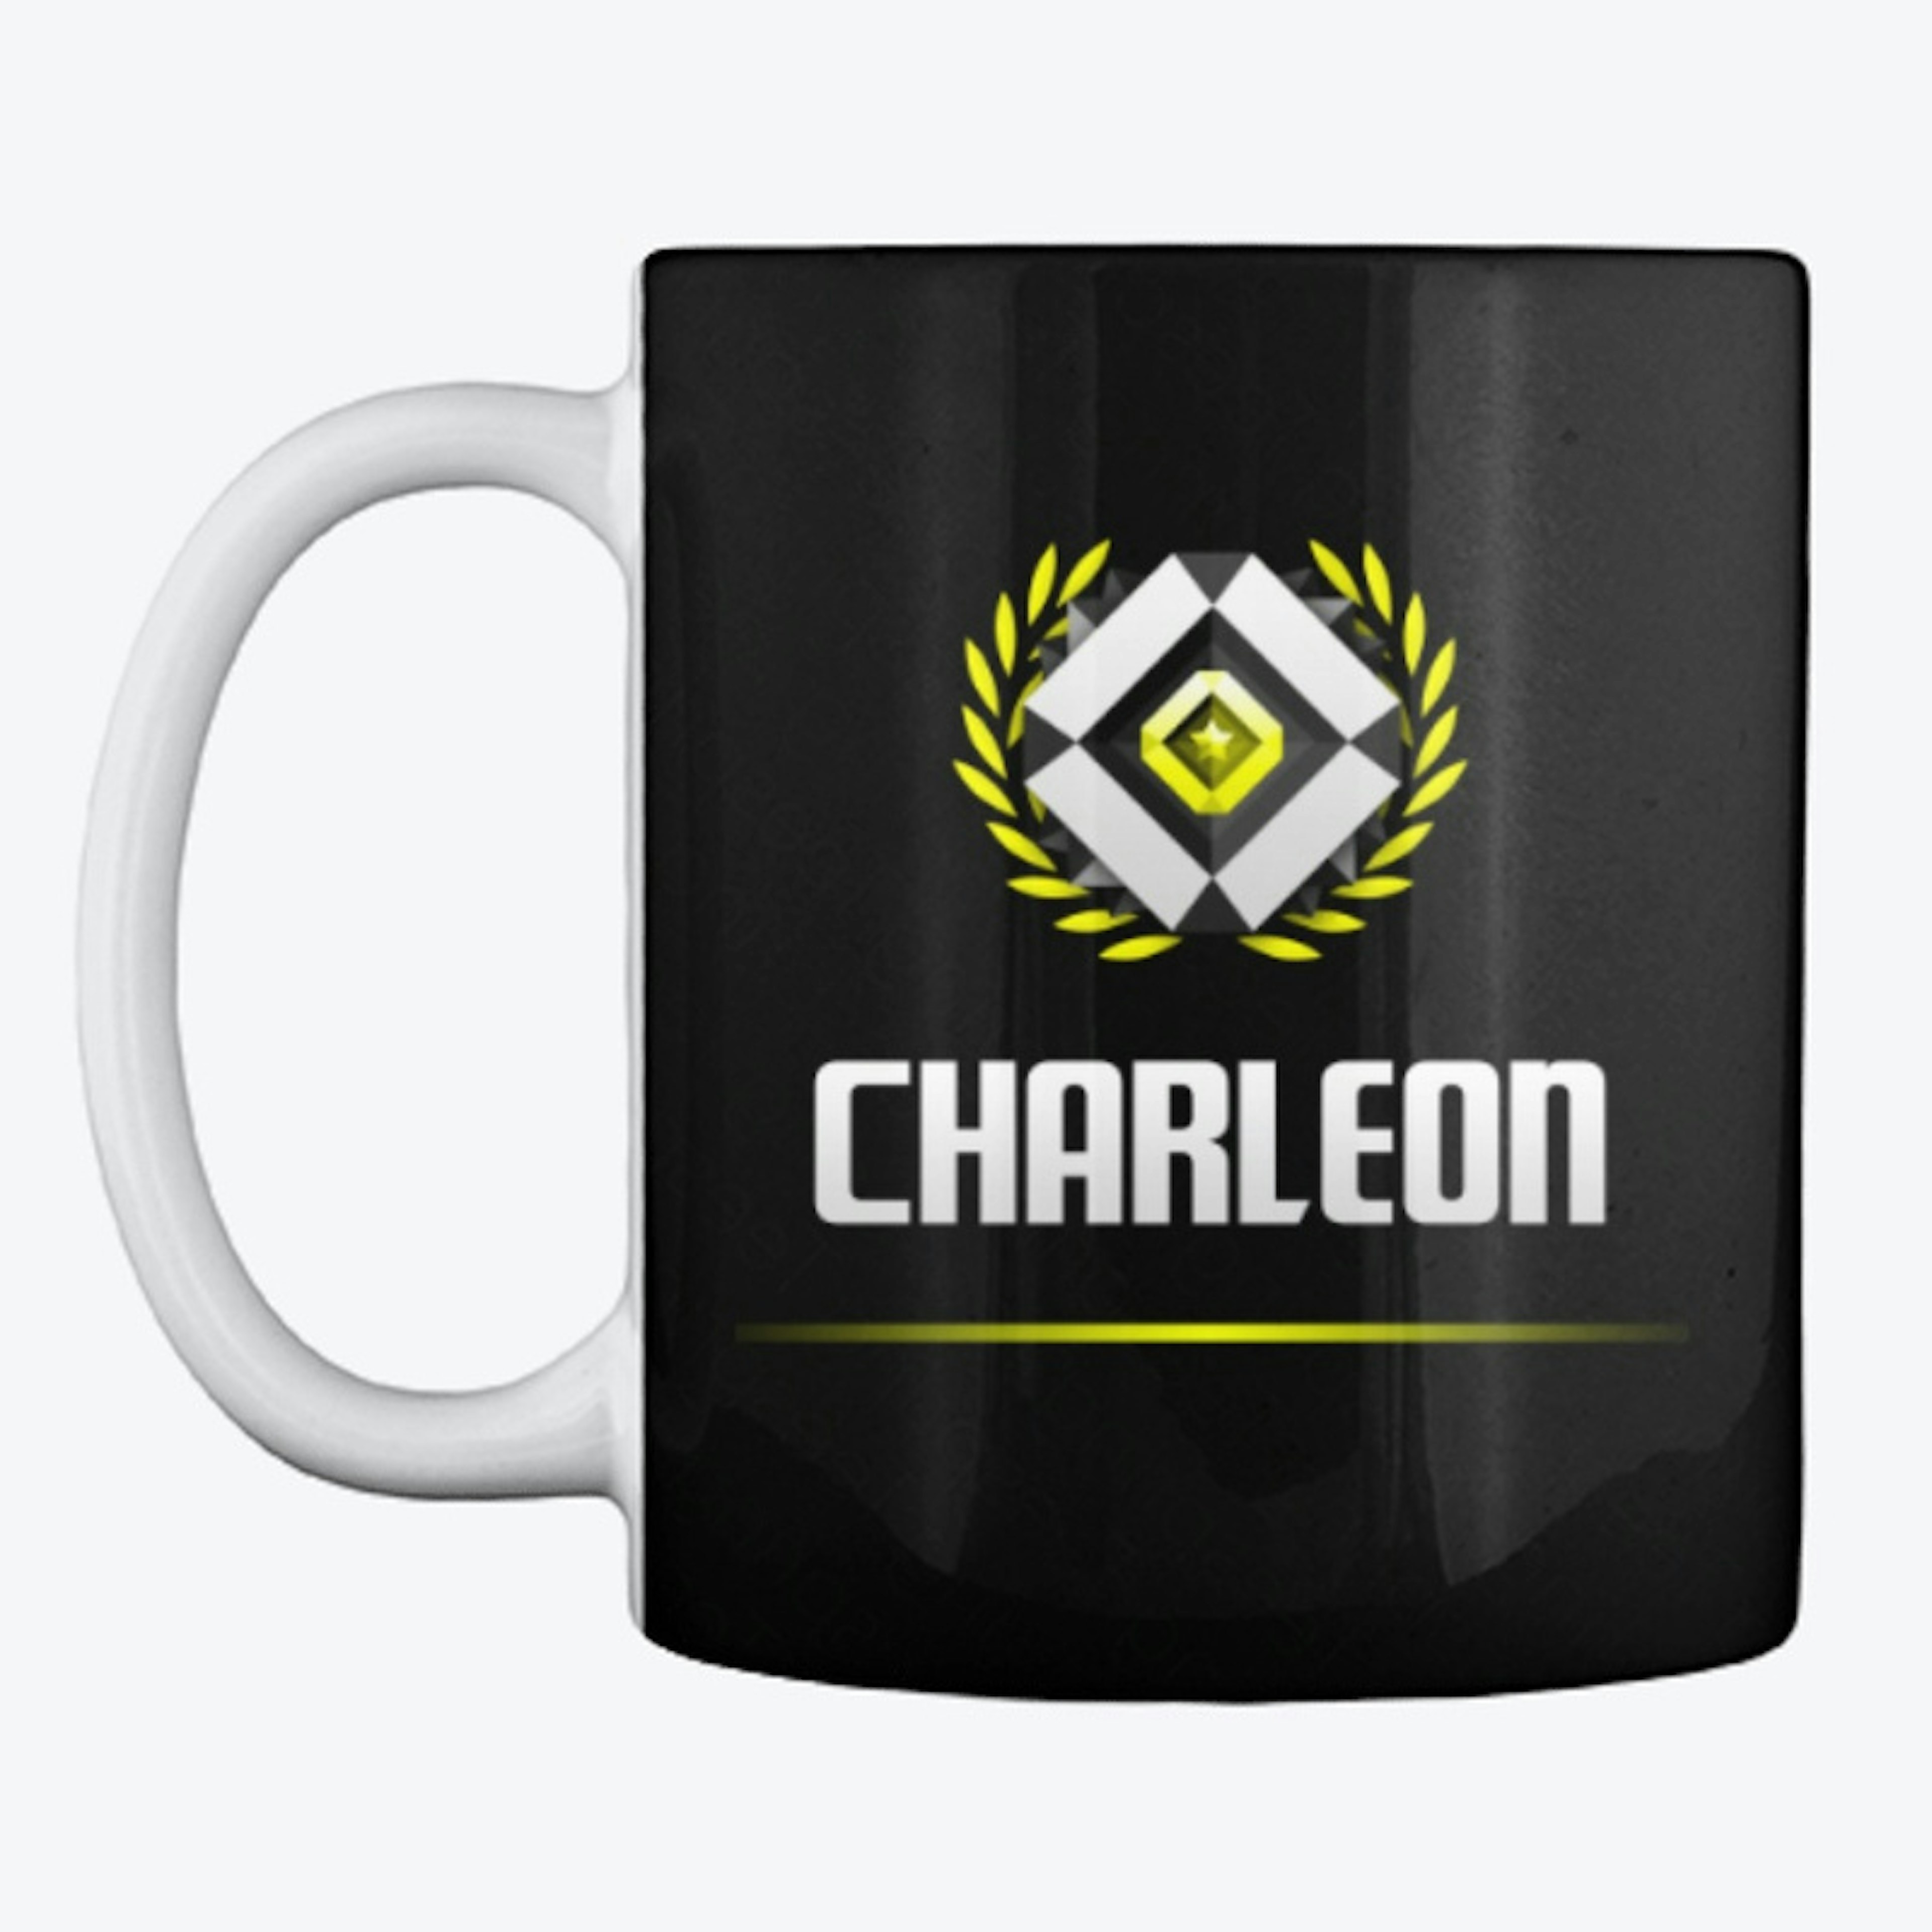 Charleon personalised mug - God Badge